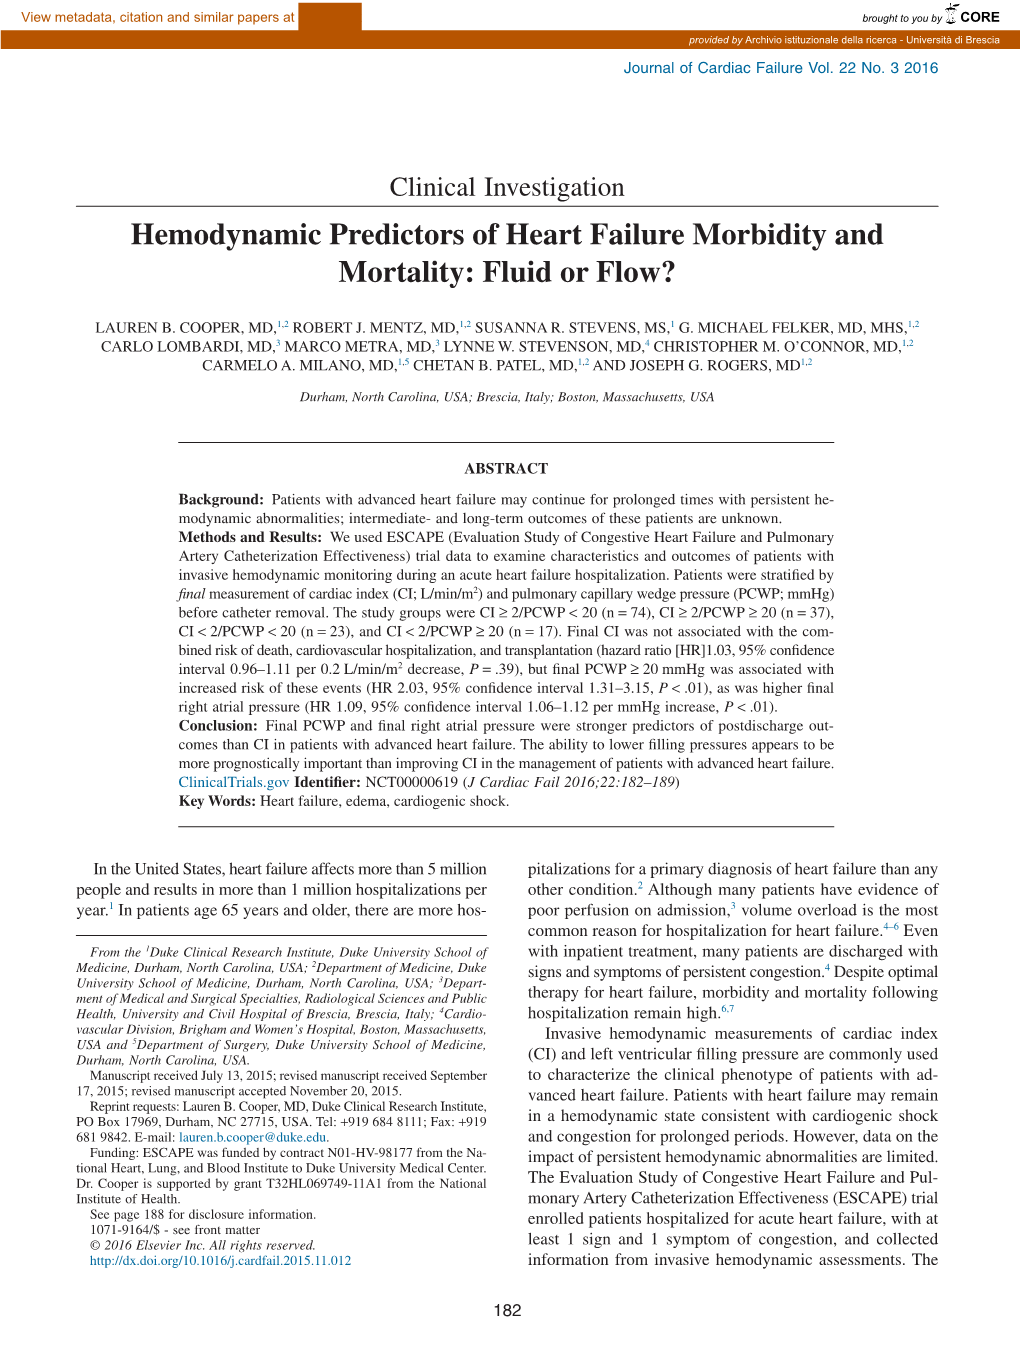 Hemodynamic Predictors of Heart Failure Morbidity and Mortality: Fluid Or Flow?